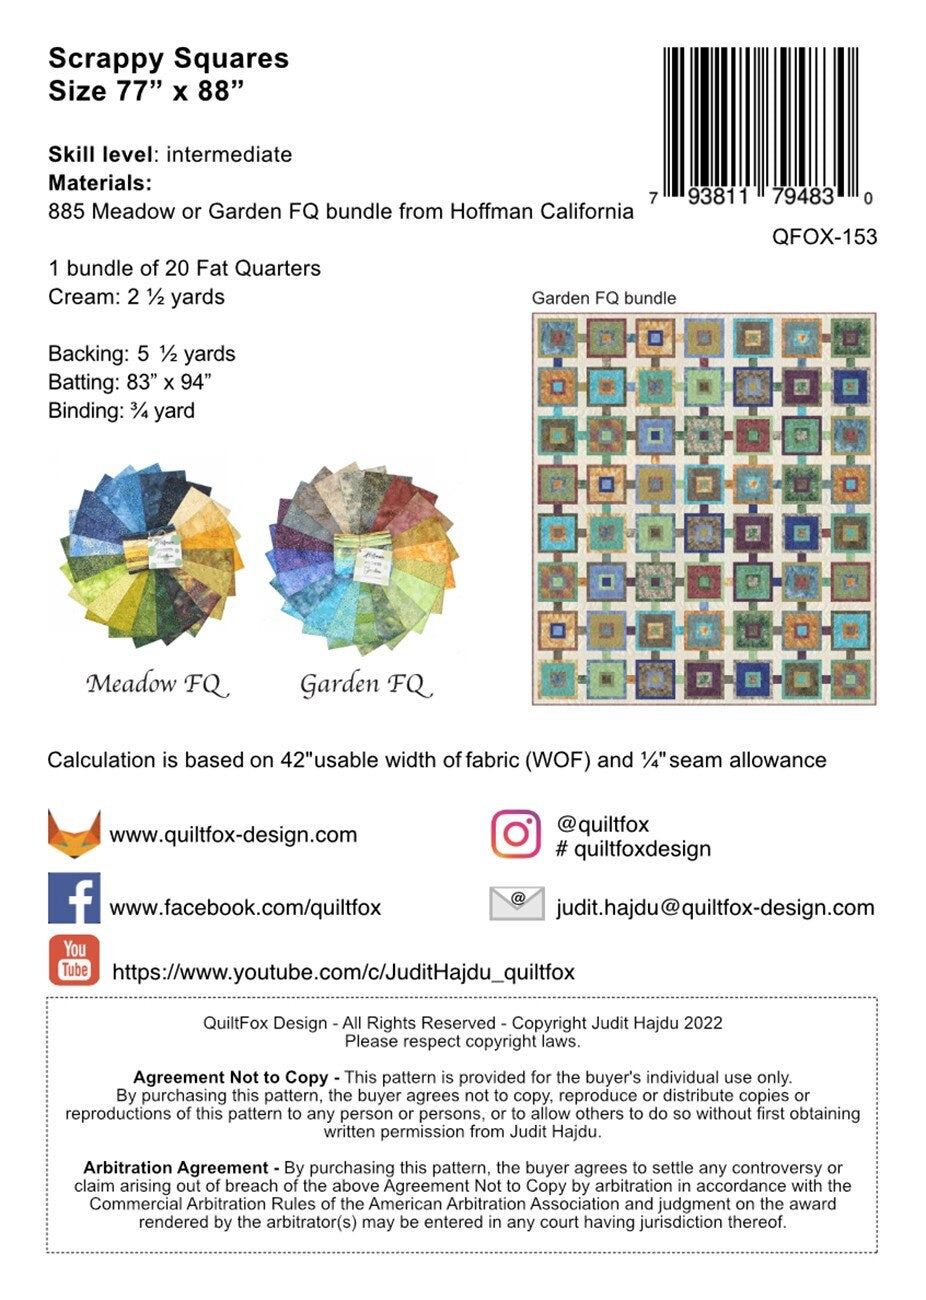 Scrappy Squares Quilt Pattern, QuiltFOX QFOX153, Fat Quarter FQ Friendly Intermetiate Throw Quilt Pattern, Judit Hajdu